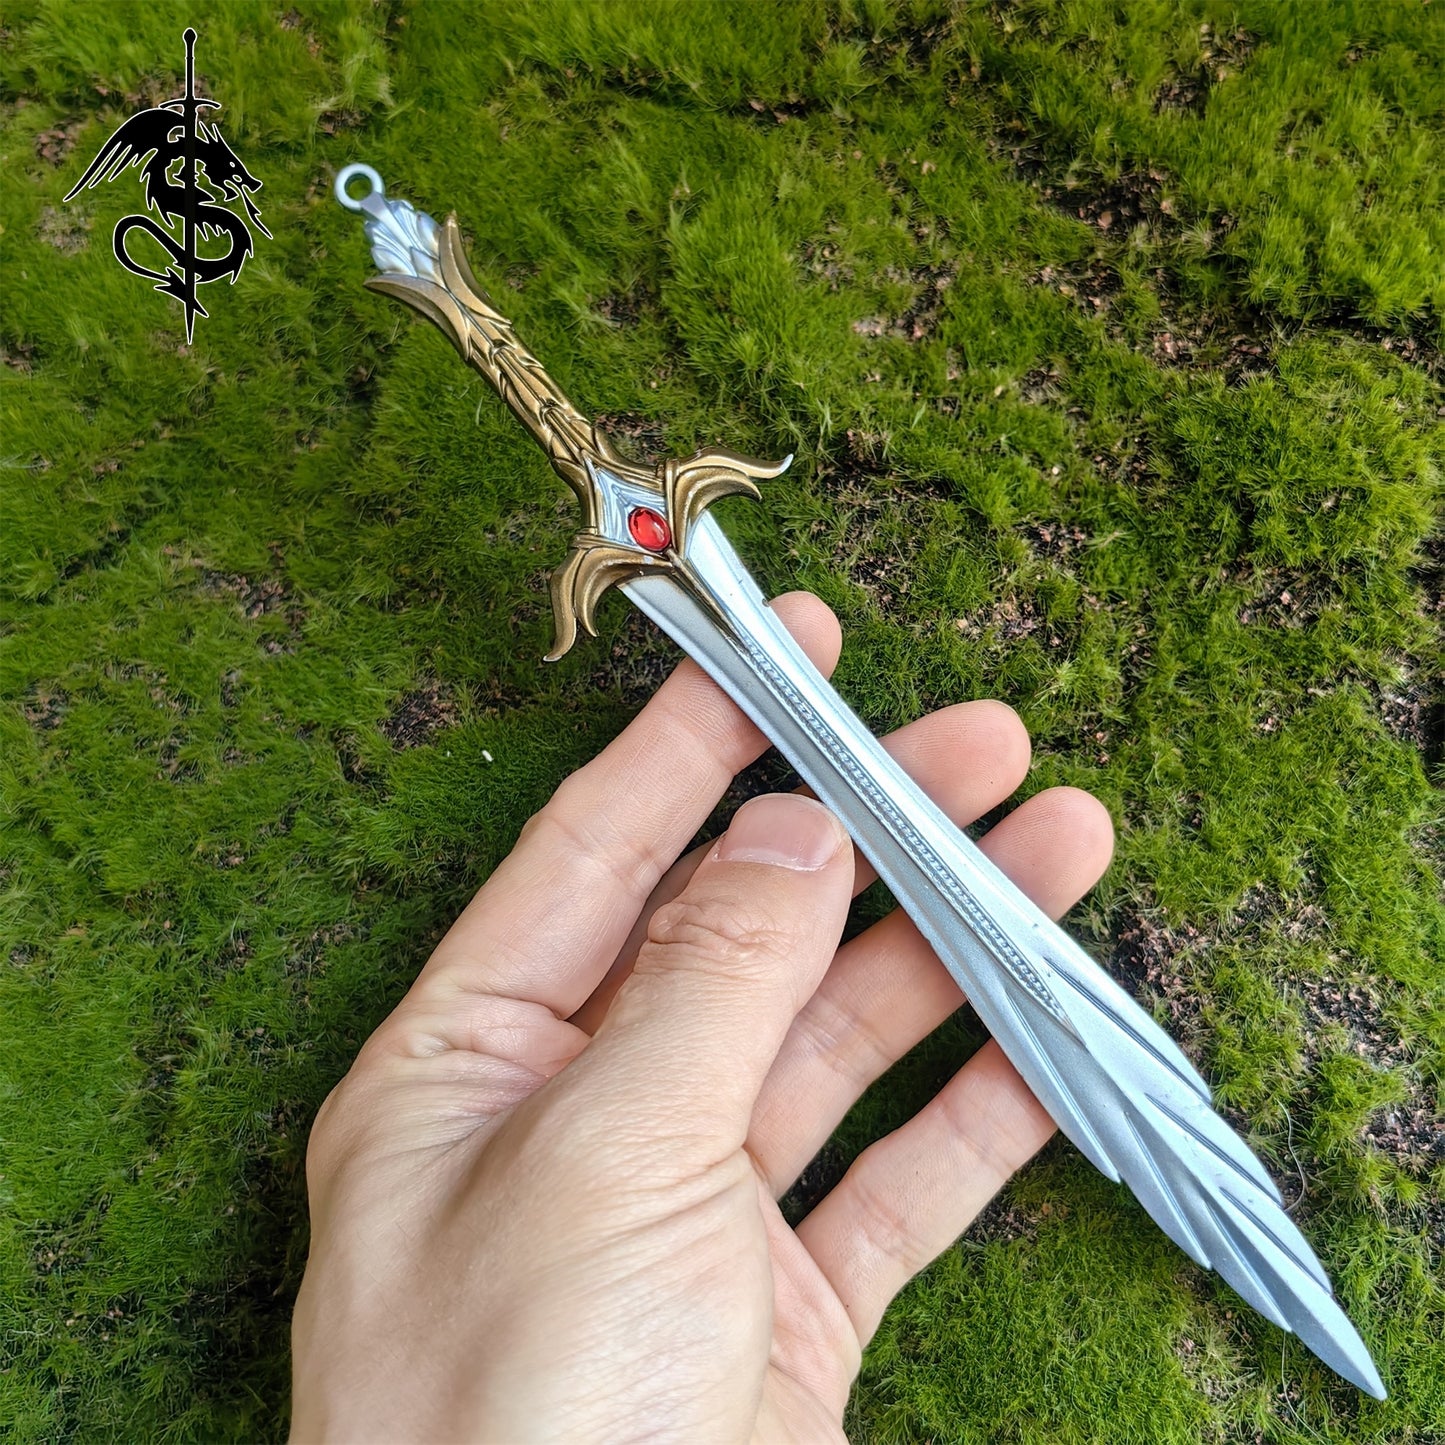 Skyrim Weapon Mini Swords 9 In 1 Pack